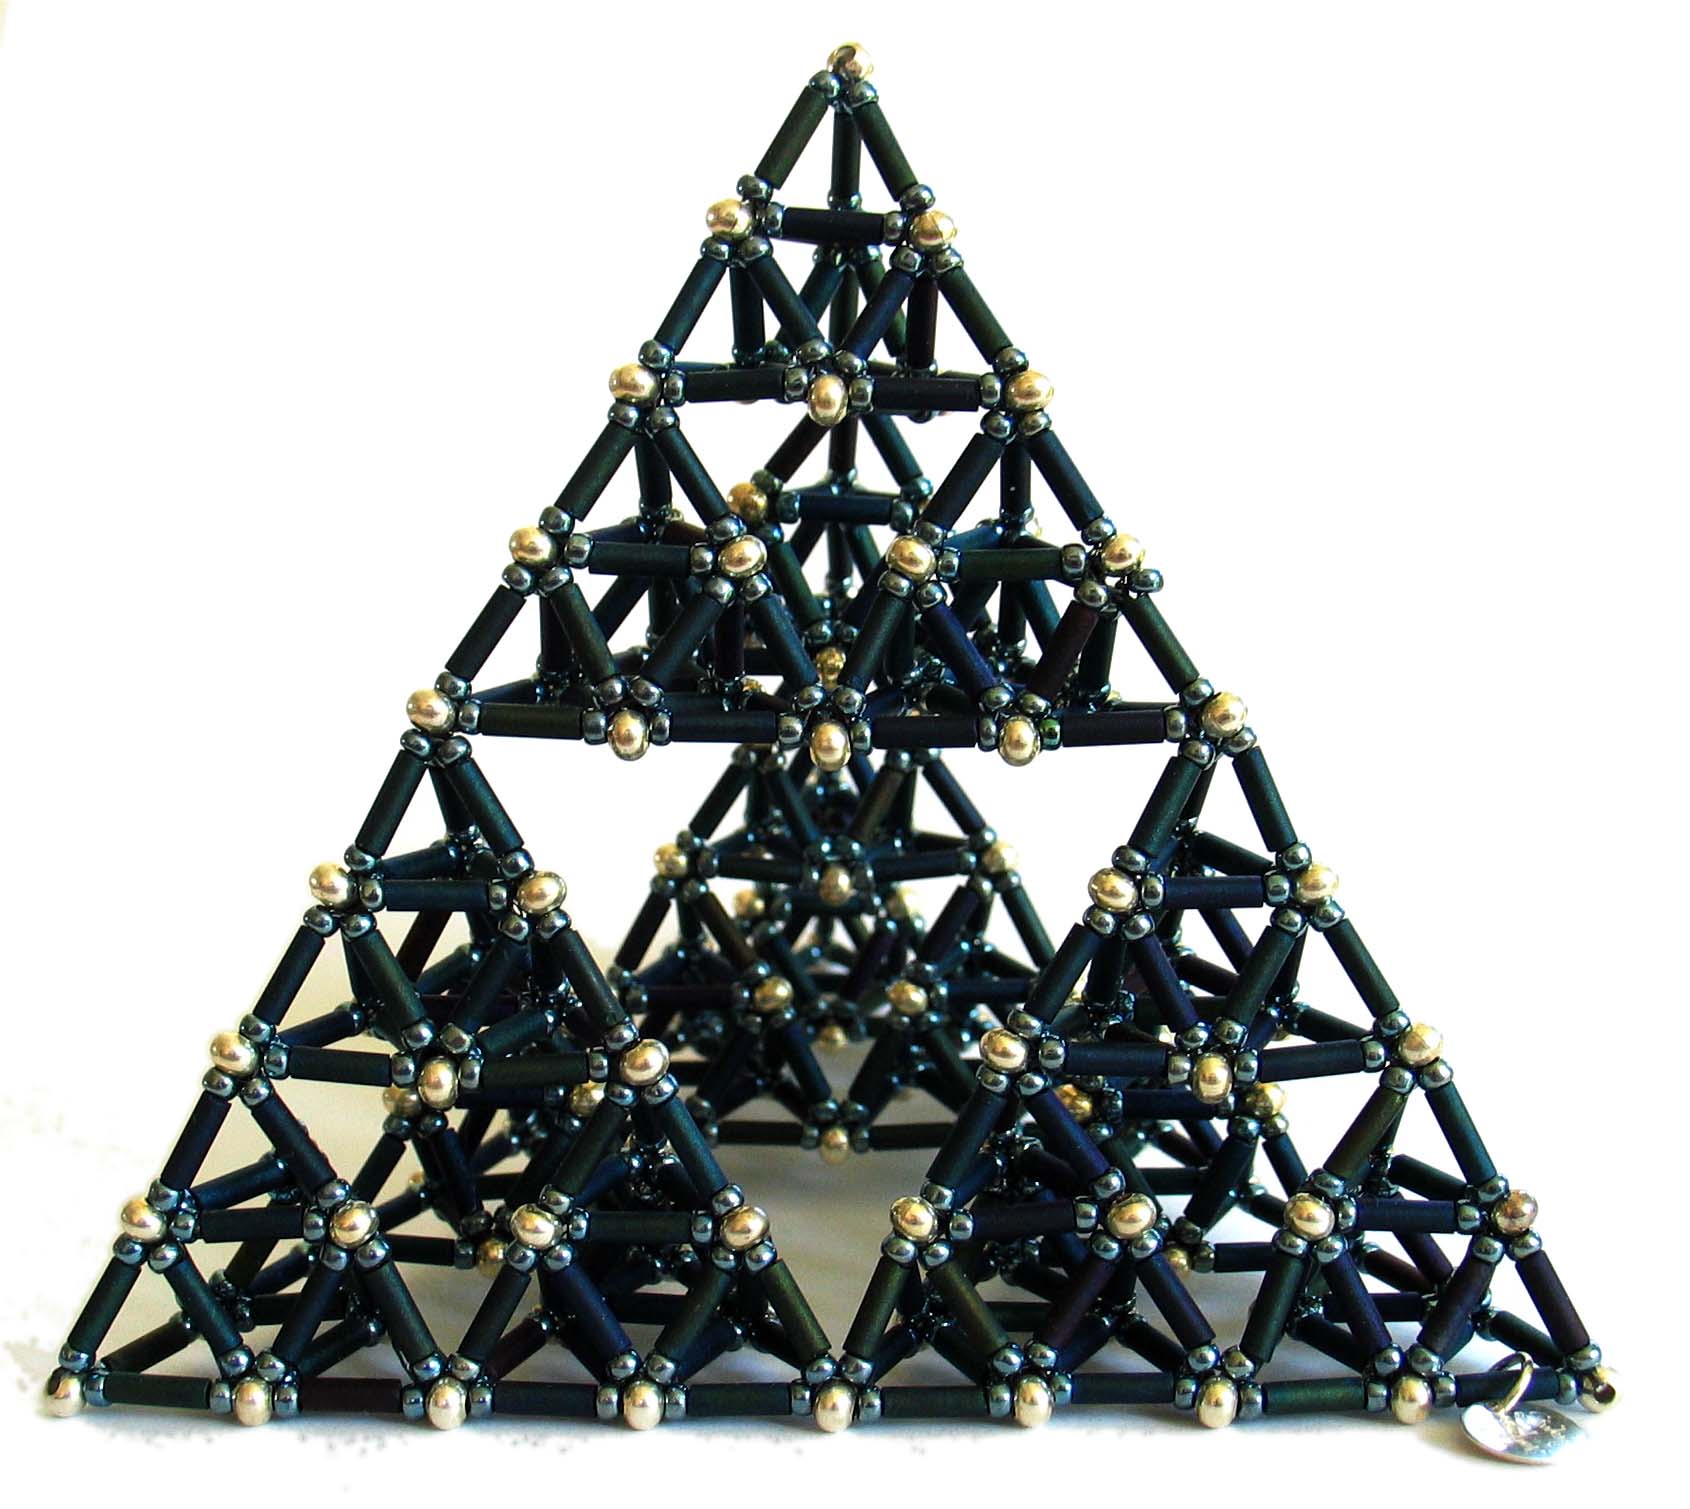 Third generation tetrahedron